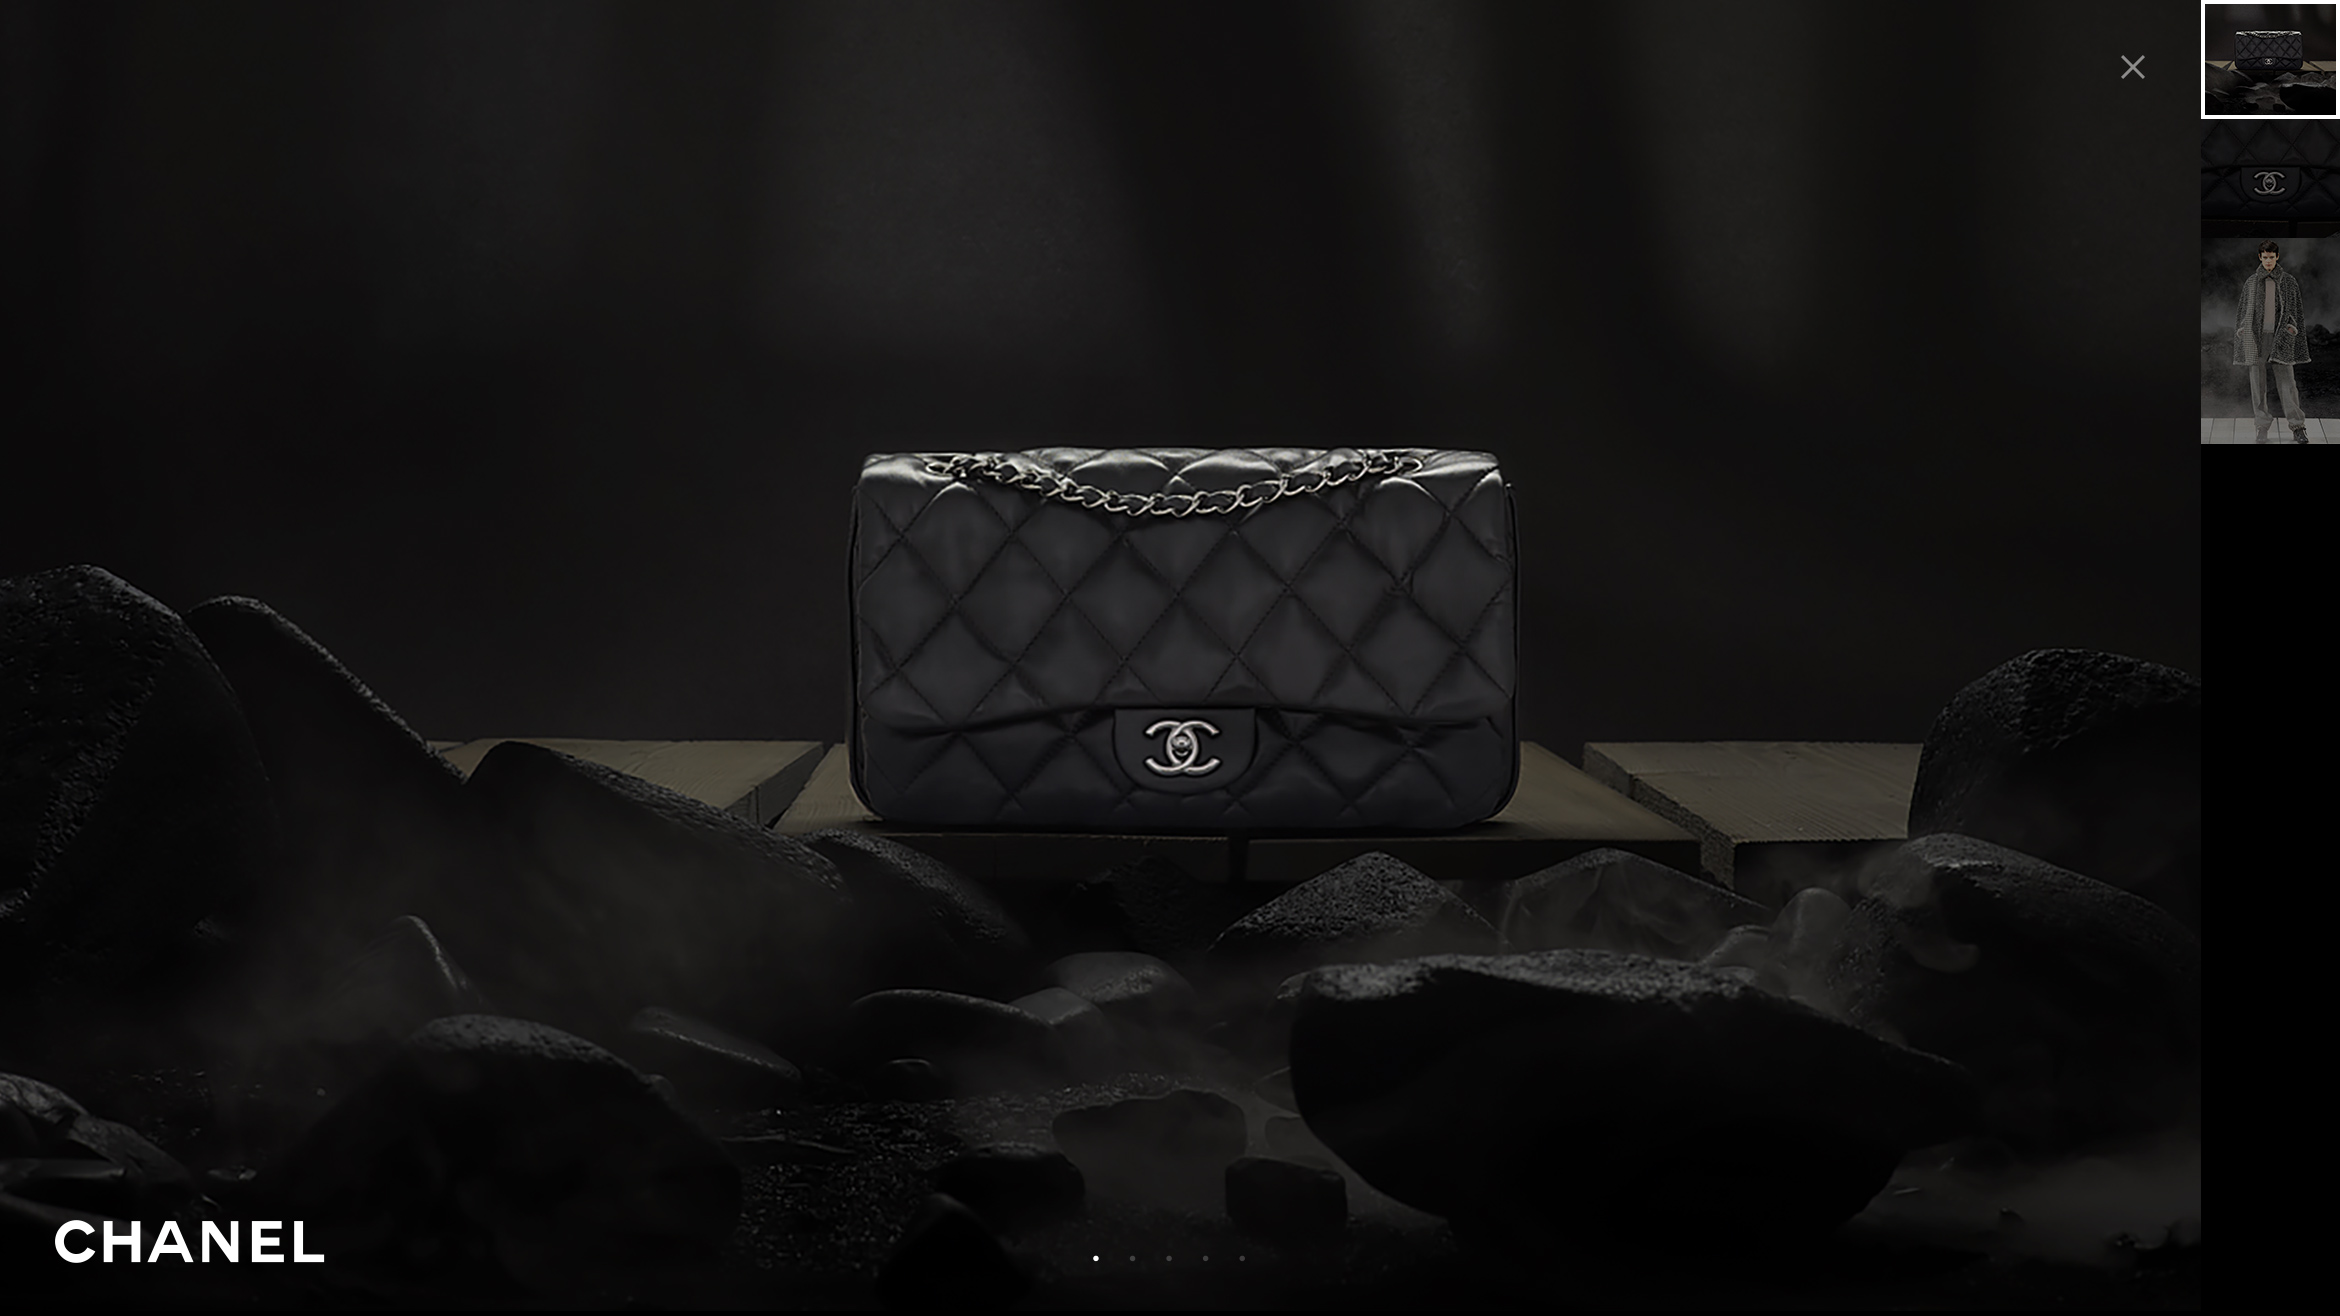 Chanel_Fashion_Product_Handbag_2